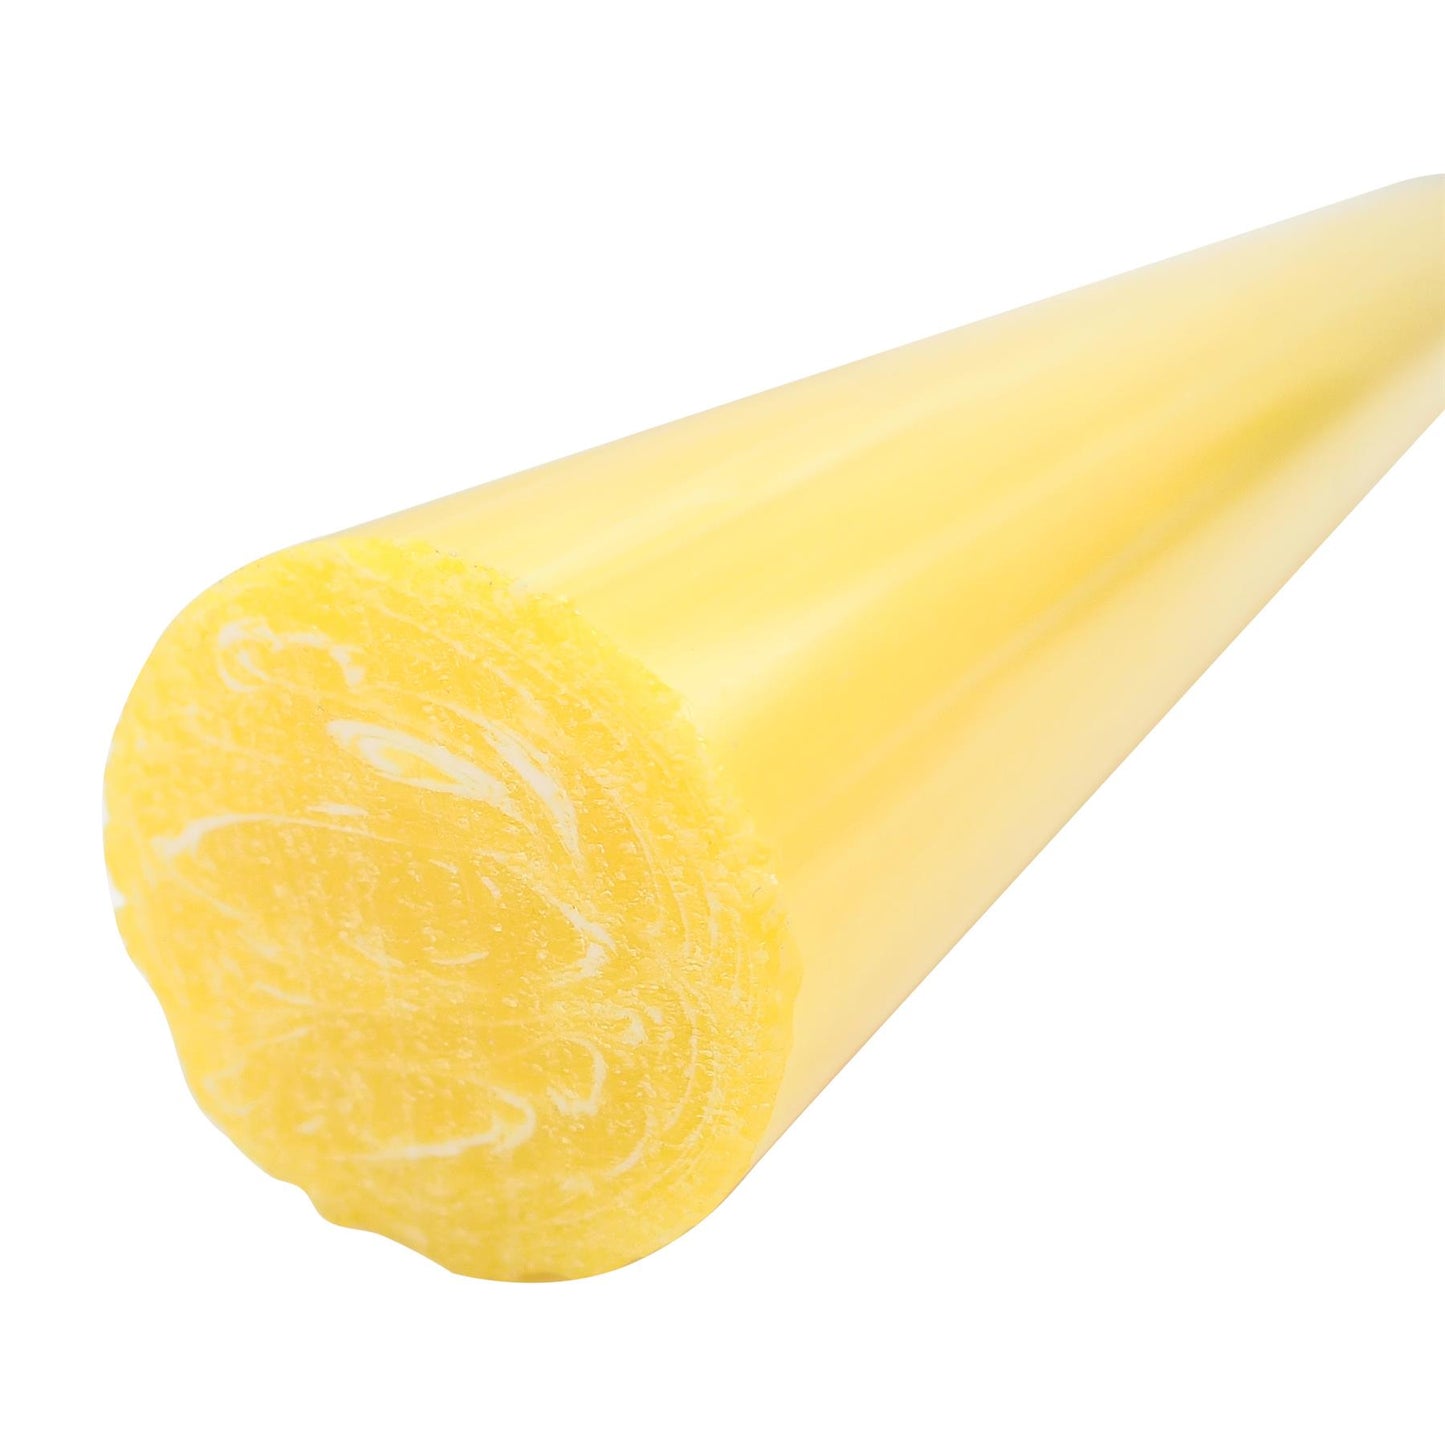 Turners' Mill Lemon Yellow Polyester Turning Blank - 152.4x39x39mm